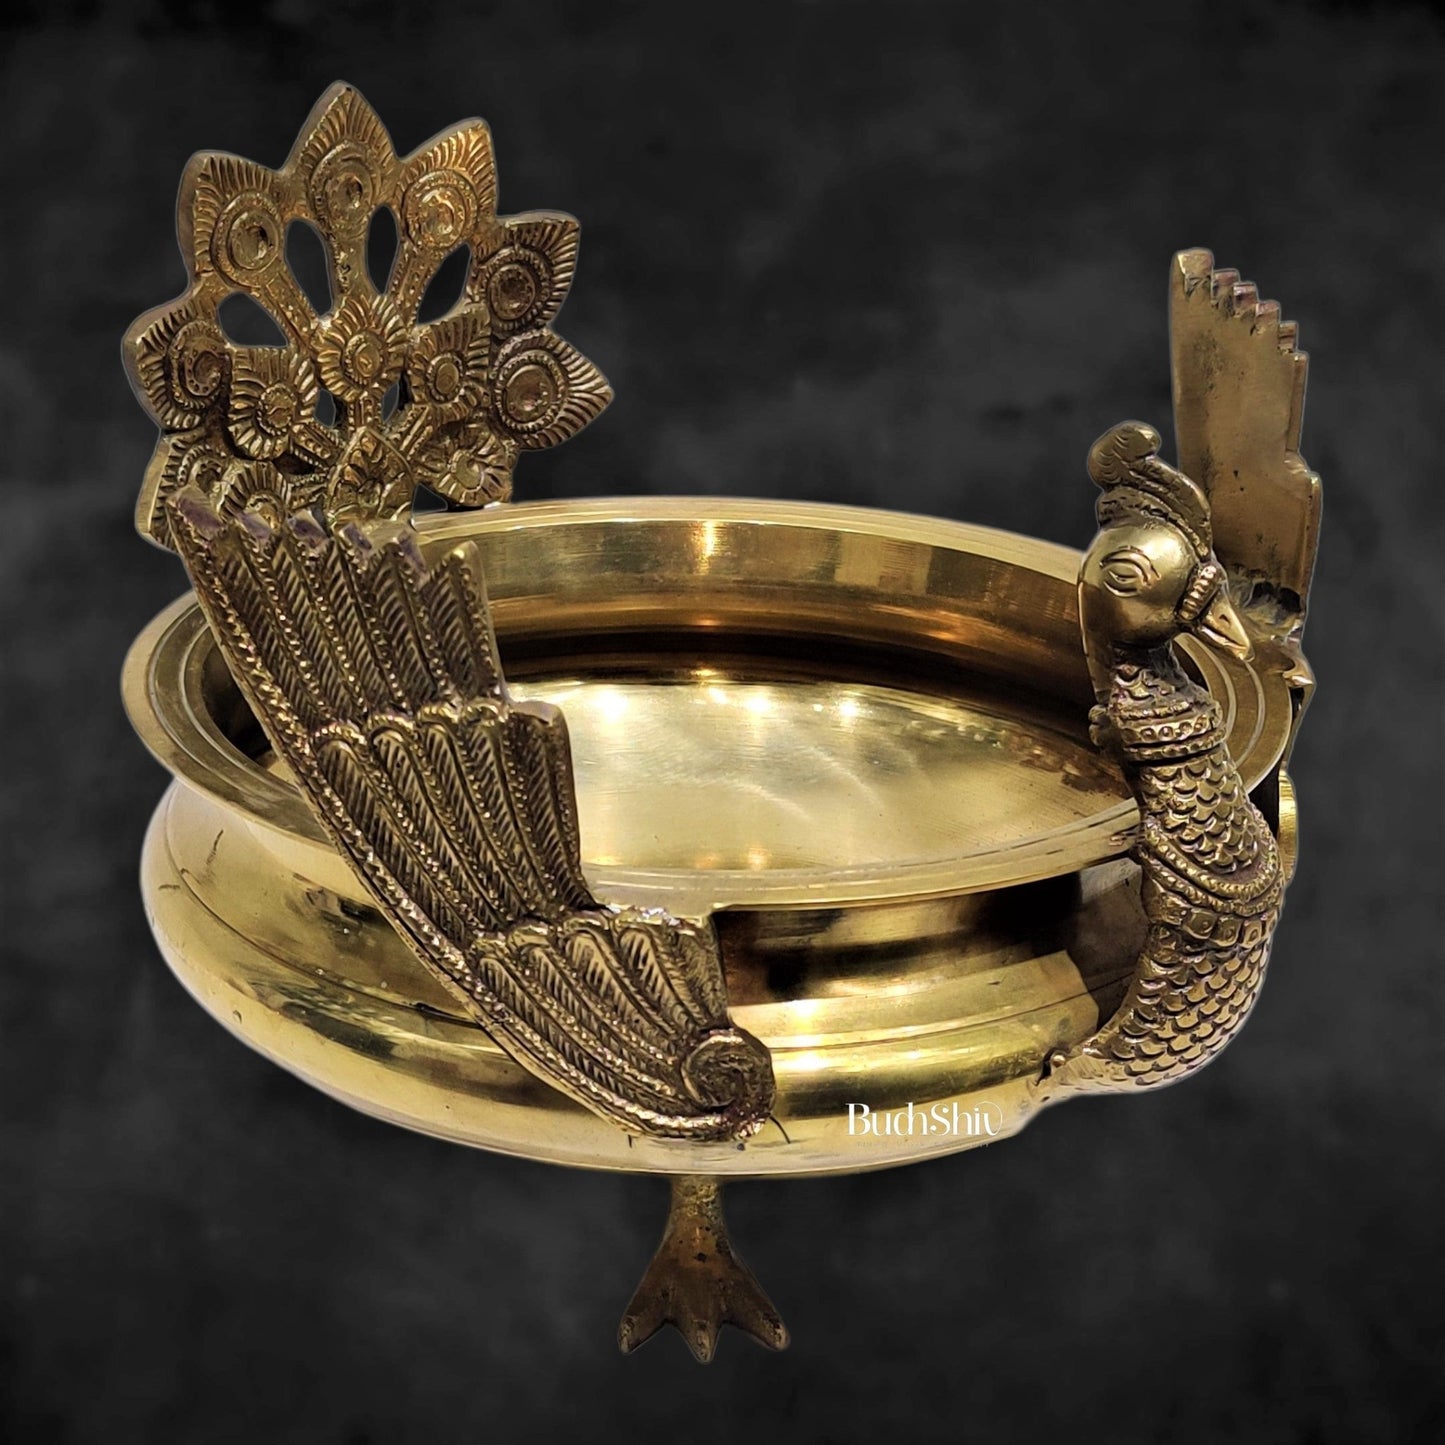 Brass peacock shaped urli golden - Budhshiv.com